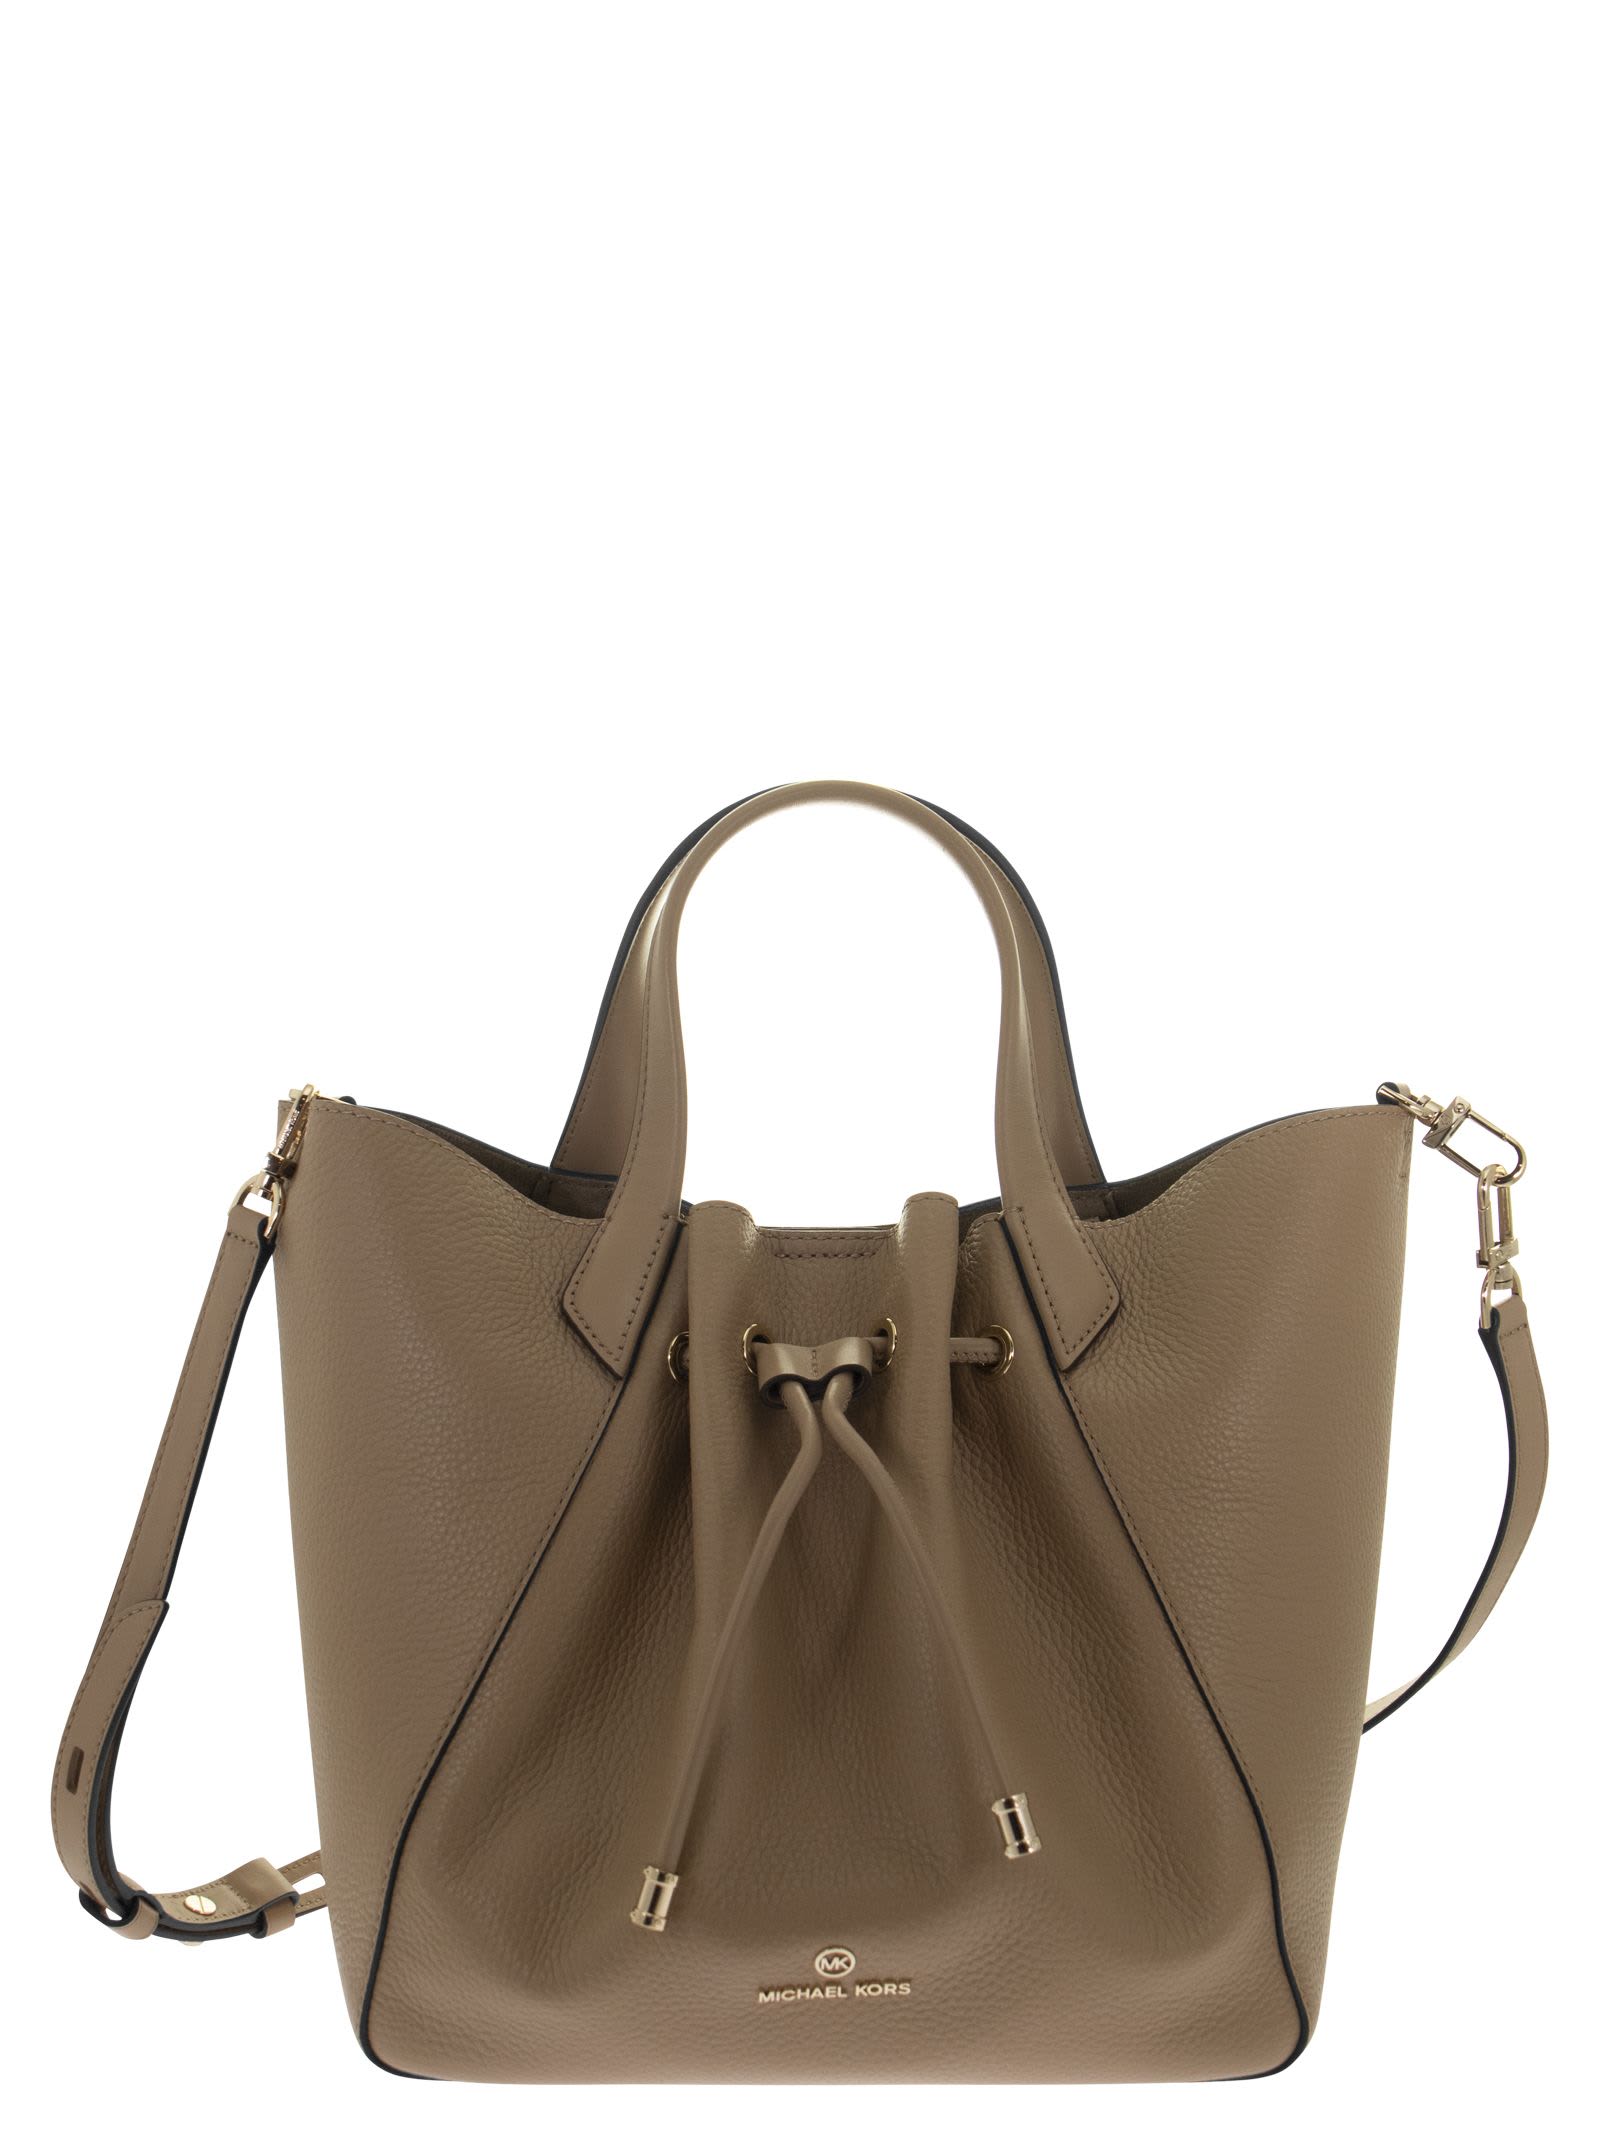 Michael Kors Phoebe- Leather Handbag